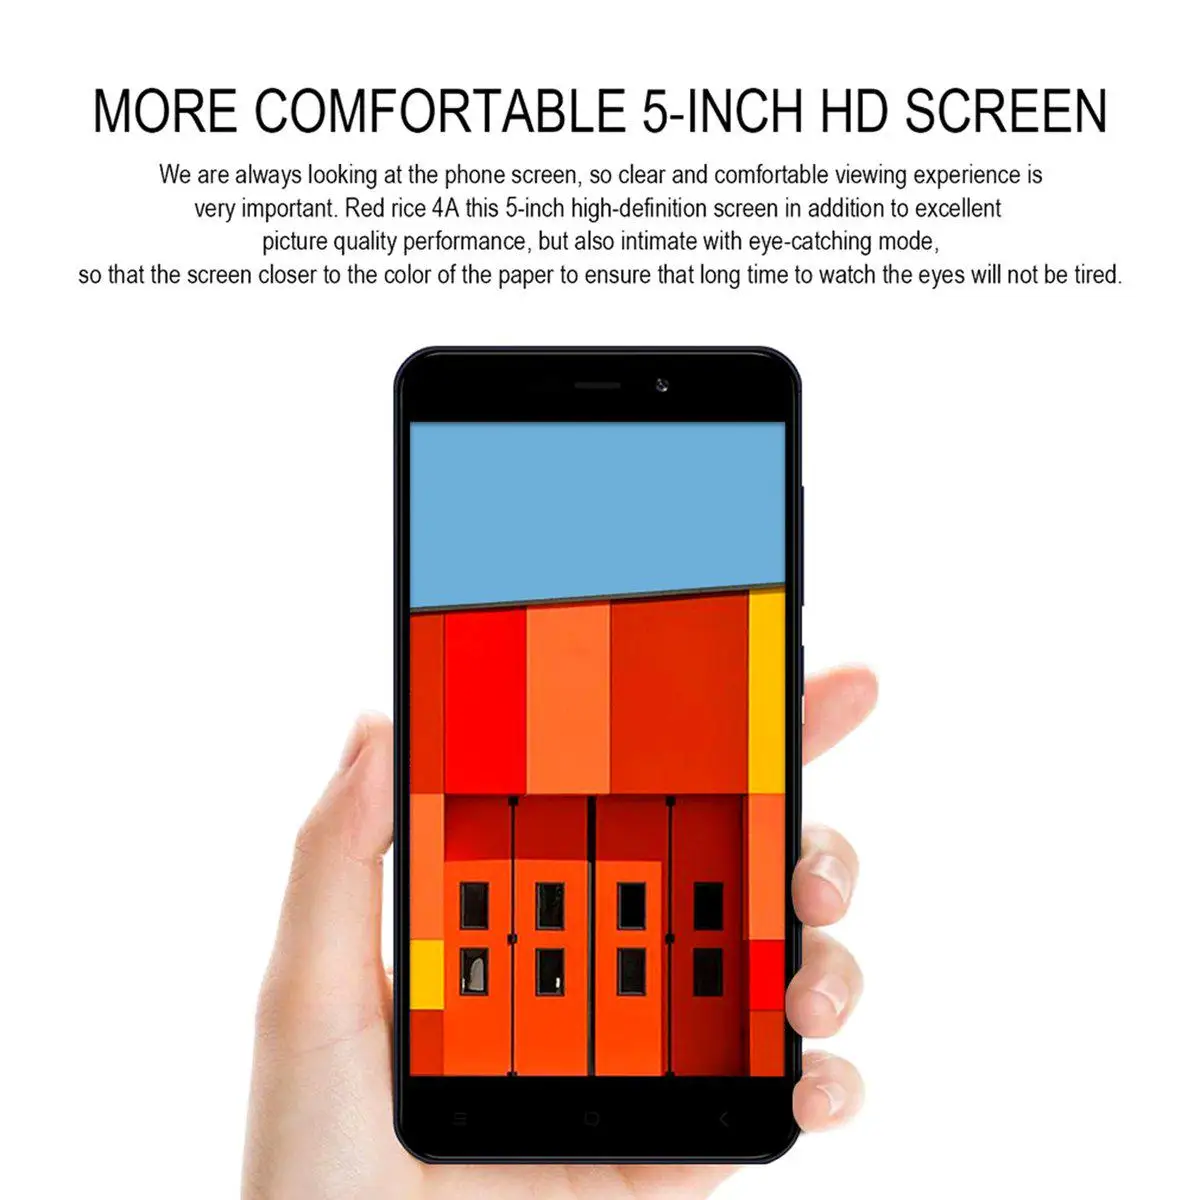 Xiaomi Redmi 4A googleplay smartphone Snapdragon 425 13.0MP rear camera Hybrid Dual SIM